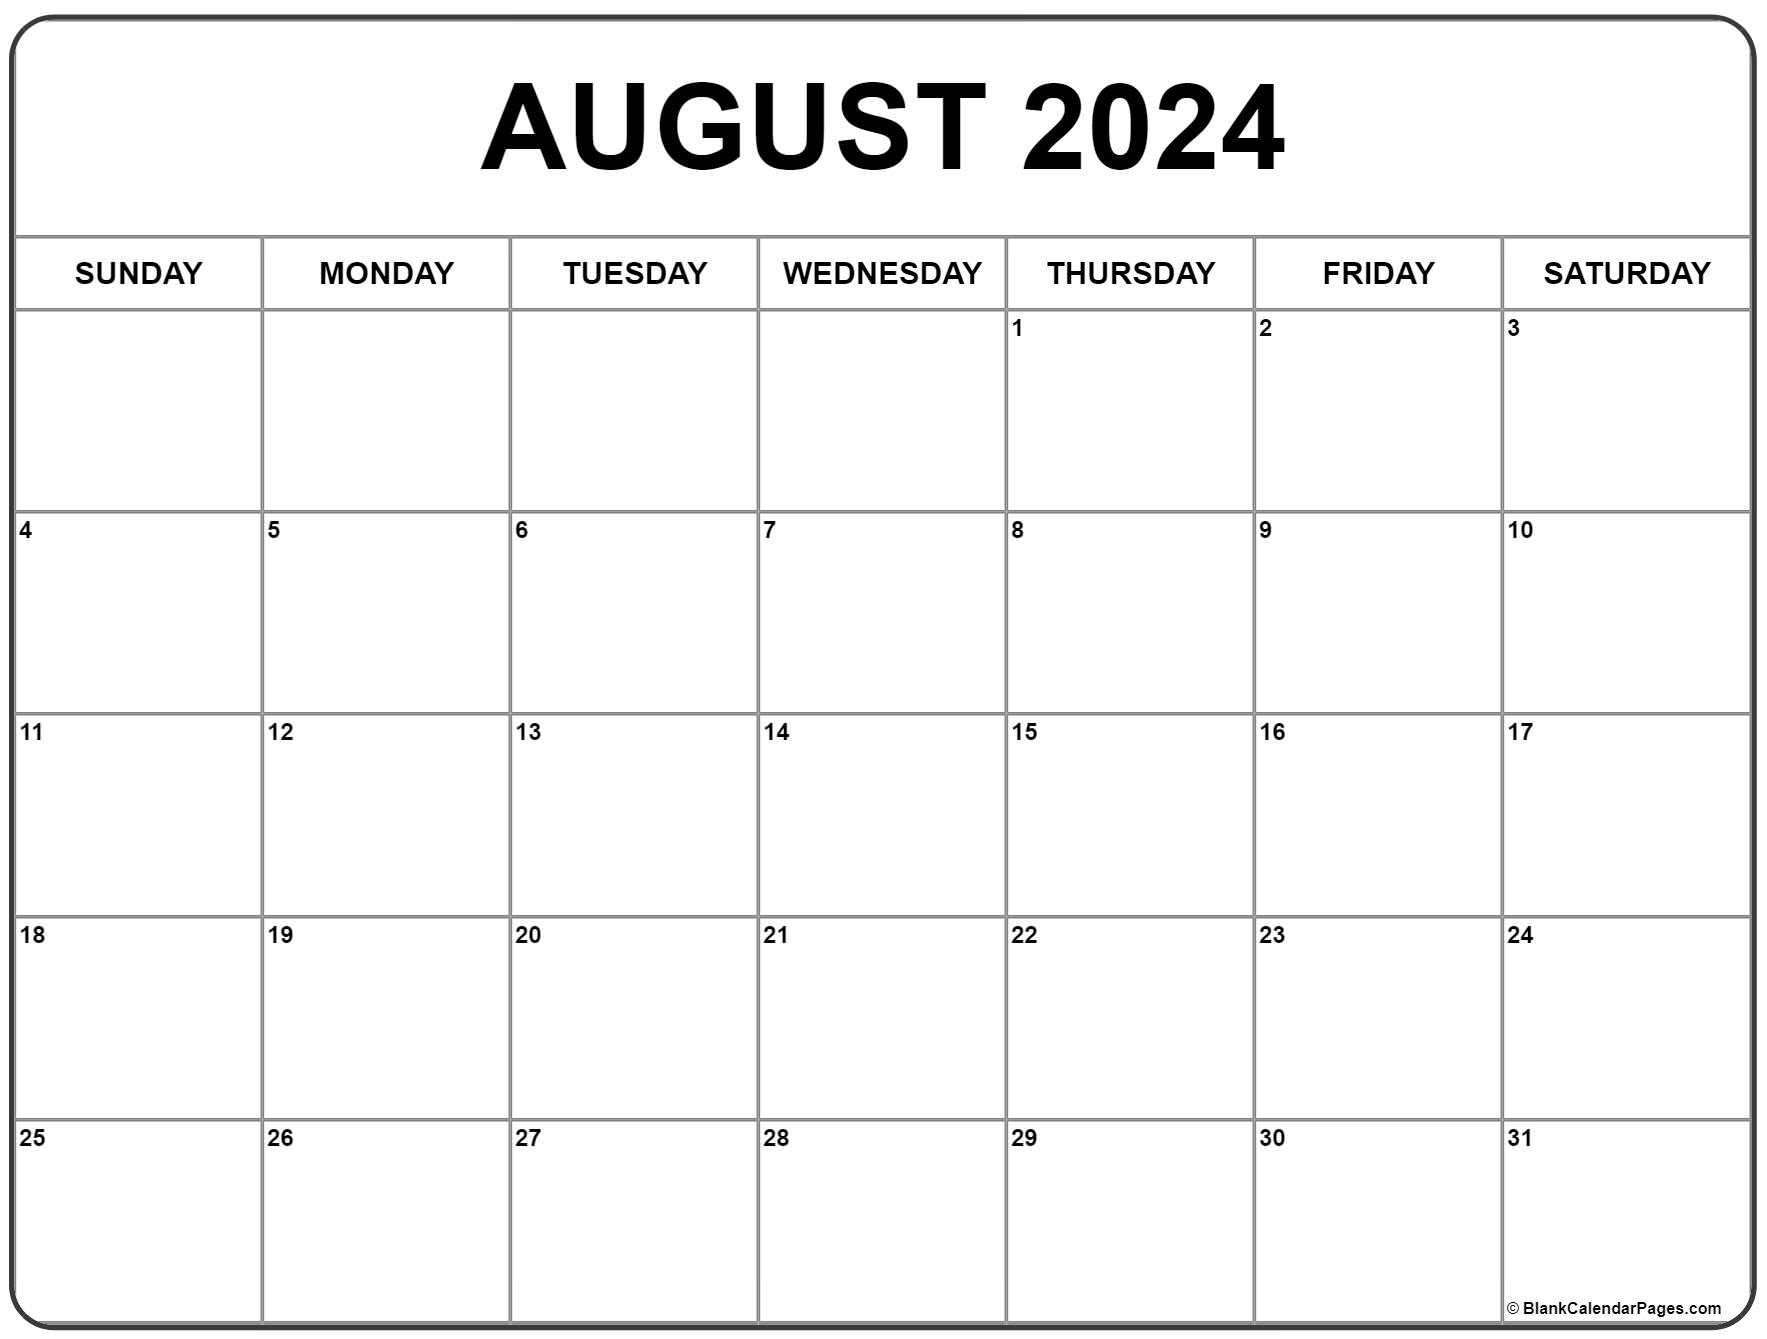 August 2024 Calendar | Free Printable Calendar for July And August 2024 Calendar Printable